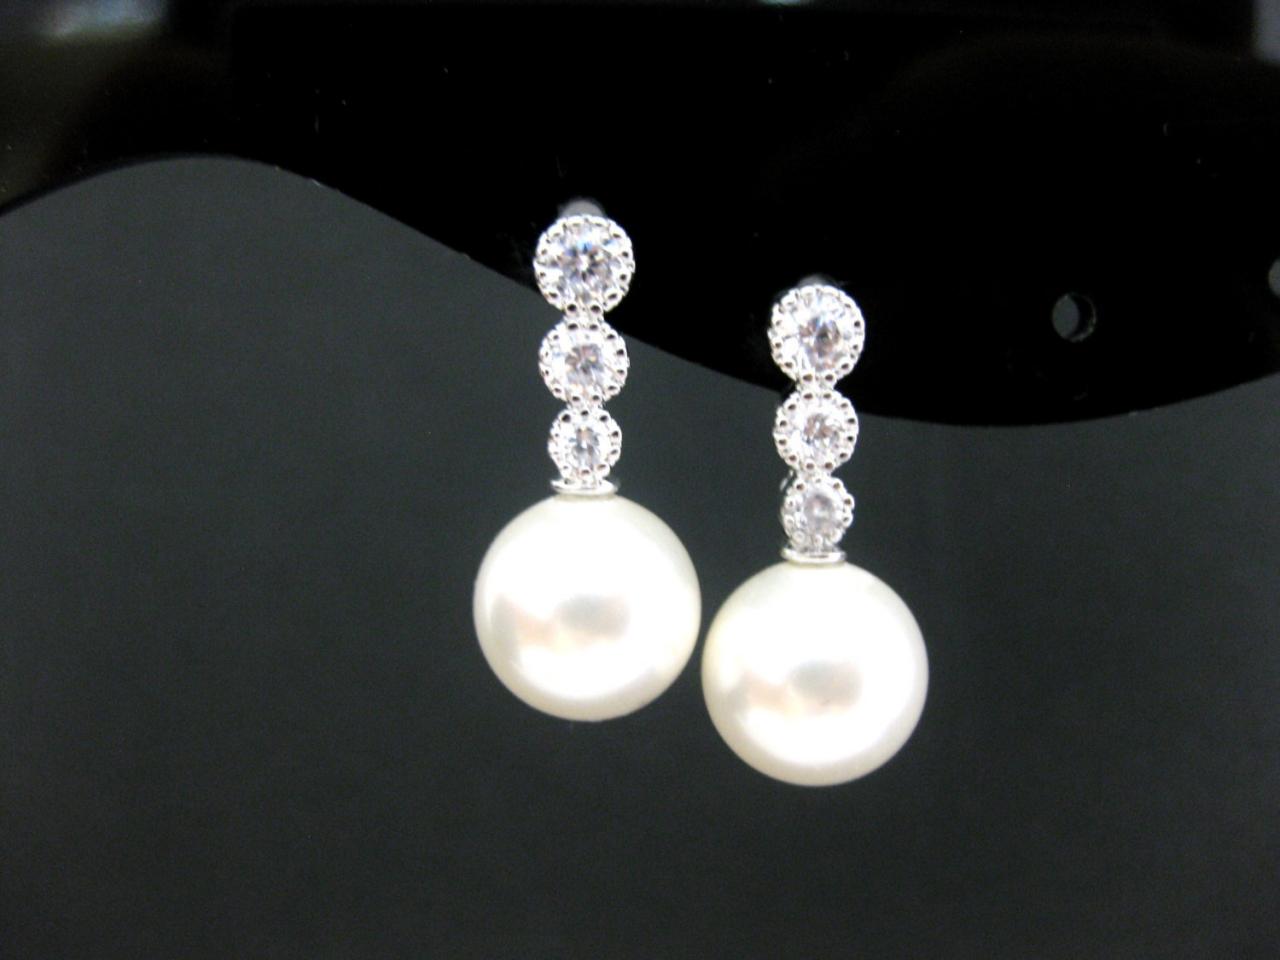 Bridal Pearl Earrings Pearl Stud Earrings Swarovski 10mm Round Pearl Wedding Jewelry Bridesmaids Gift Cubic Zirconia Earrings (e181)